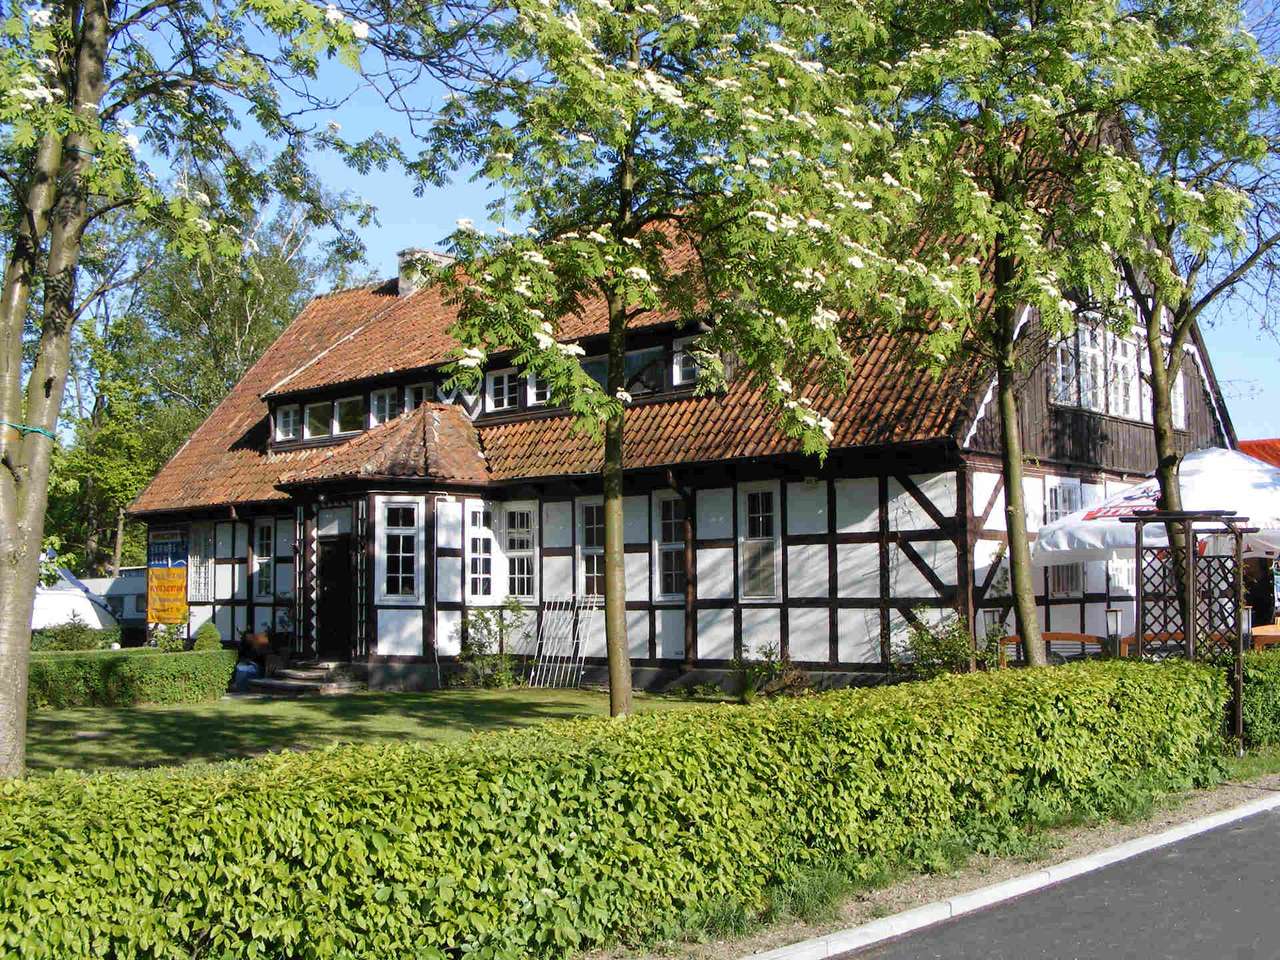 Casa em enxaimel em Loetzen na Polônia puzzle online